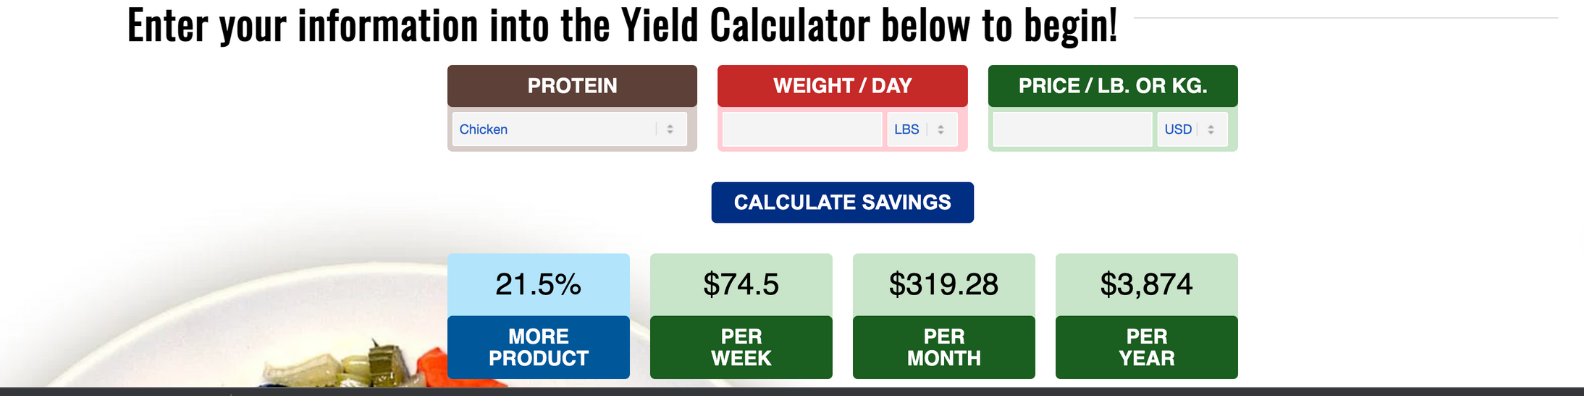 Yield Calculator 